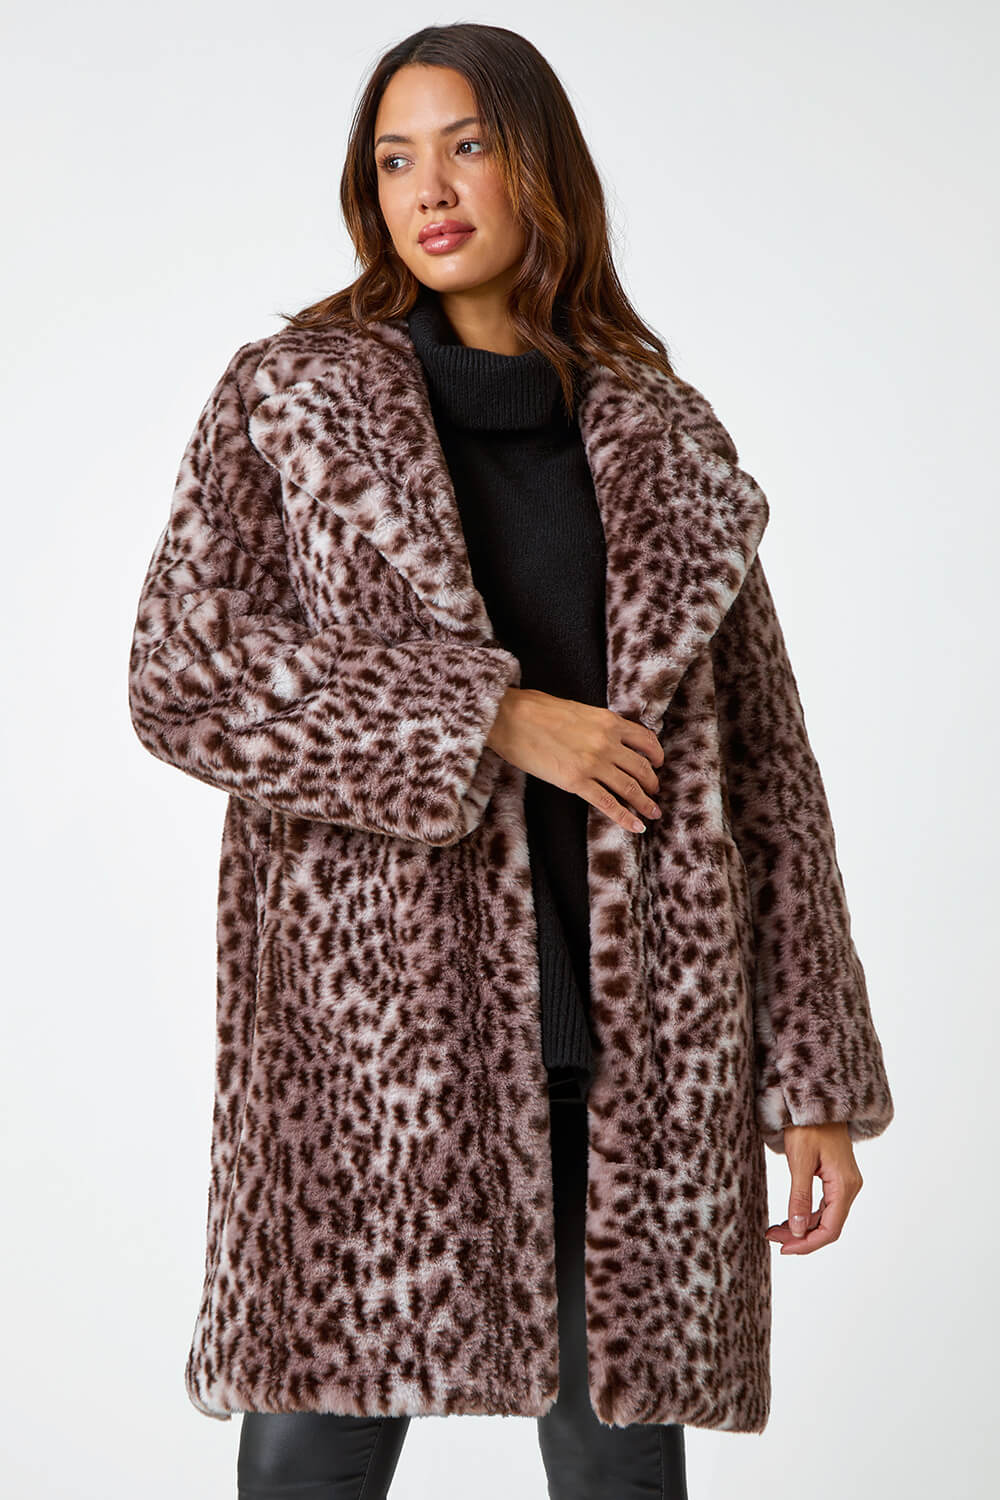 Taupe Premium Animal Print Faux Fur Coat, Image 5 of 5